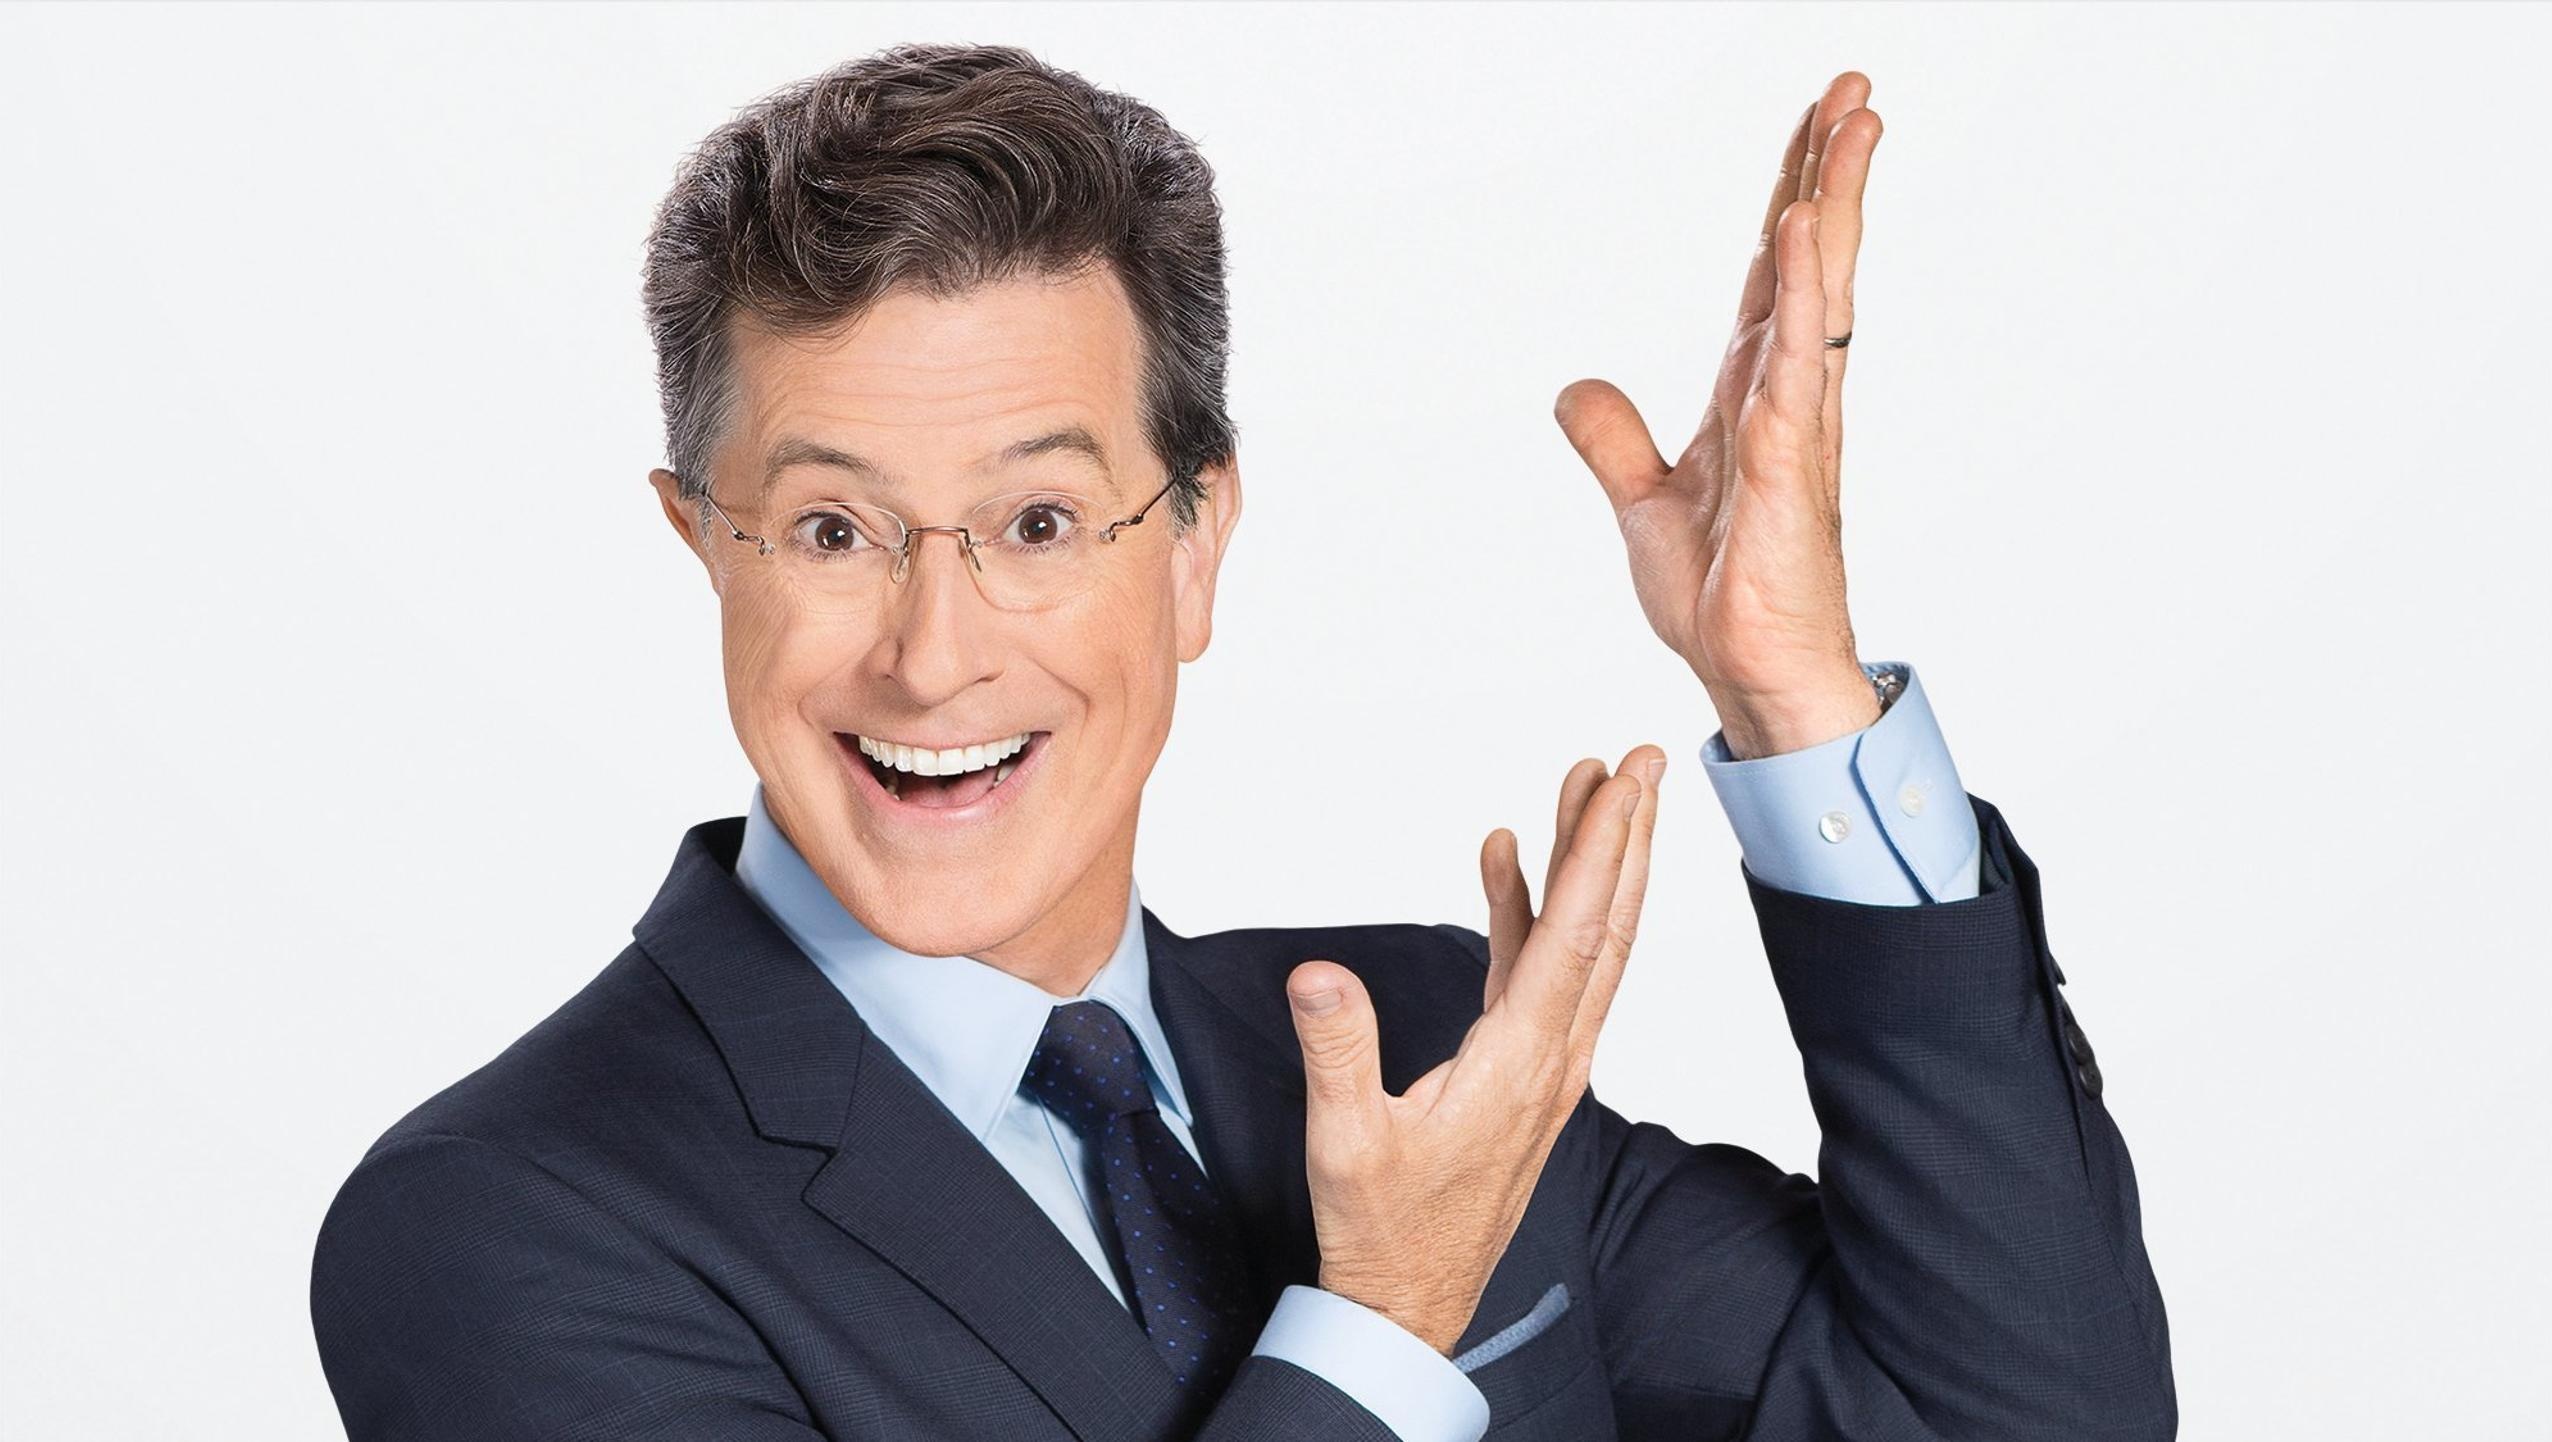 Late Show with Stephen Colbert, Desktop wallpaper, Movie-themed design, Stephen Curry cameo, 2560x1450 HD Desktop